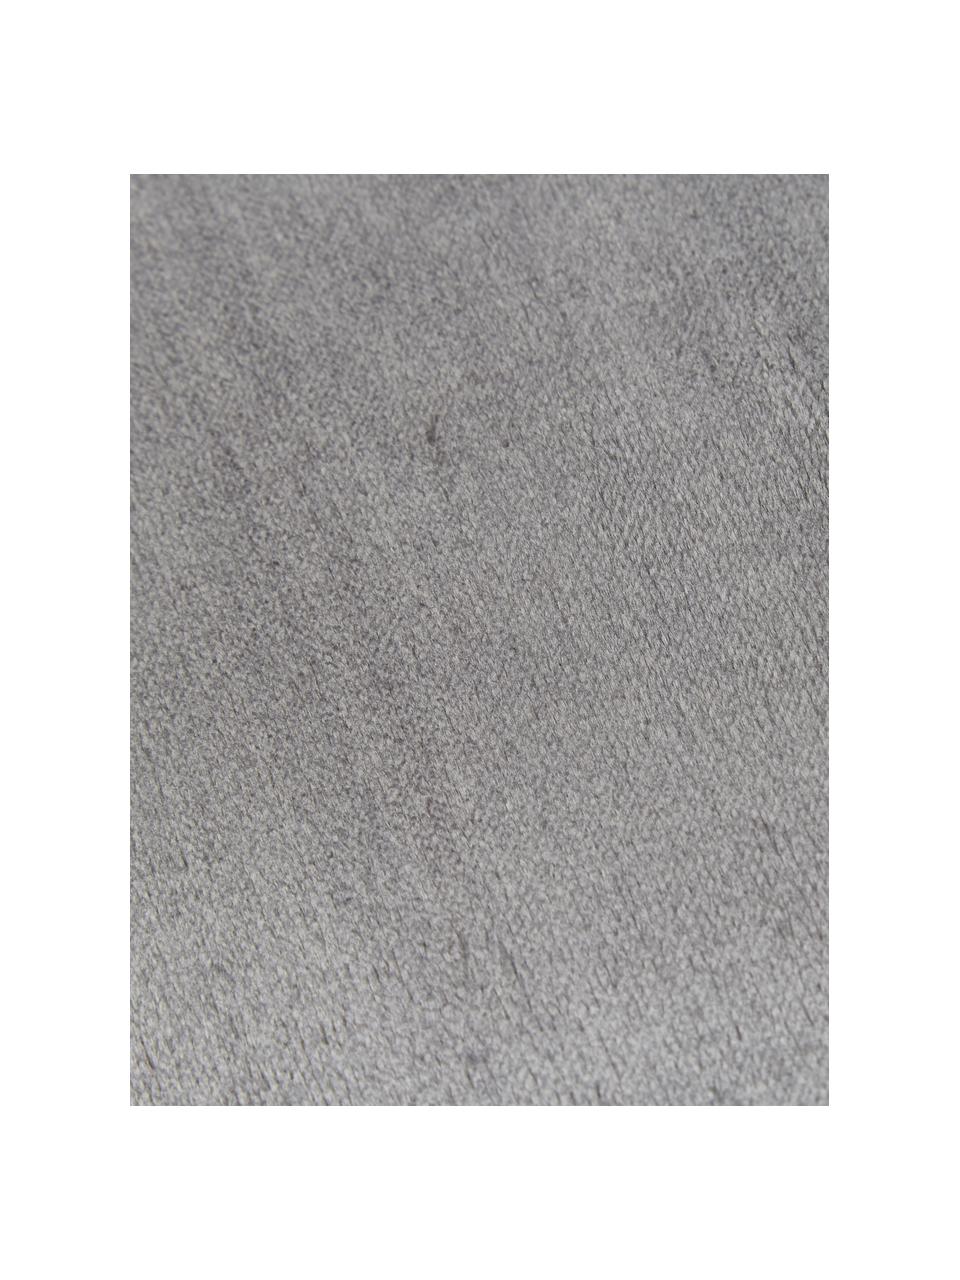 Plaid cocooning en polaire gris Doudou, 100 % polyester, Anthracite, larg. 130 x long. 160 cm